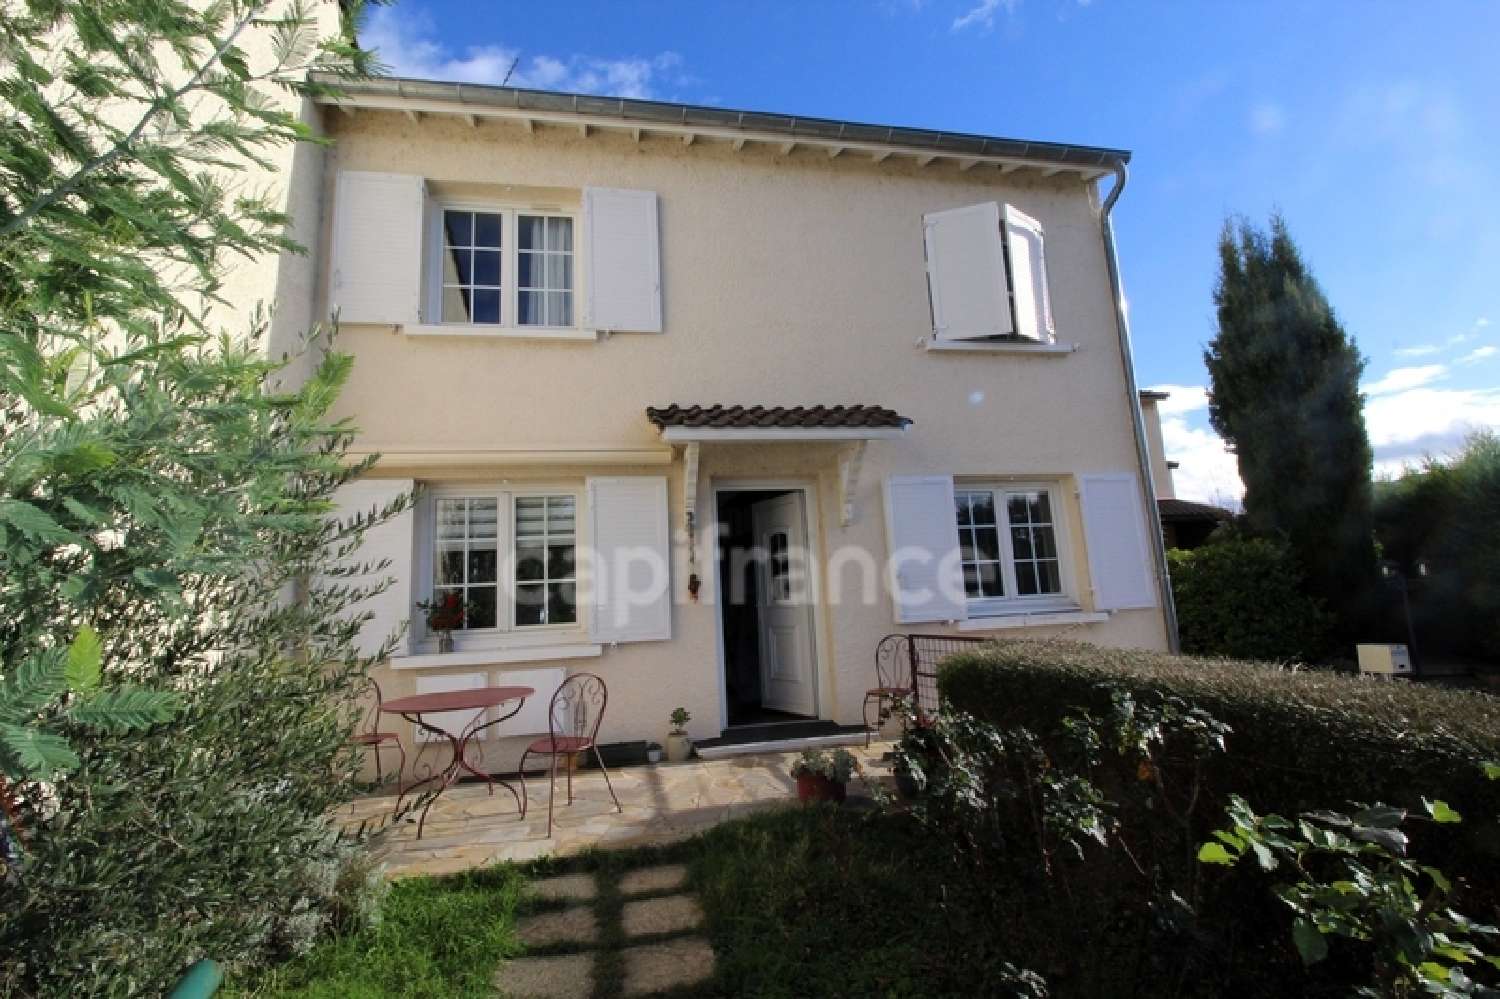  à vendre maison Beauvoir-en-Lyons, Lyon Rhône 3